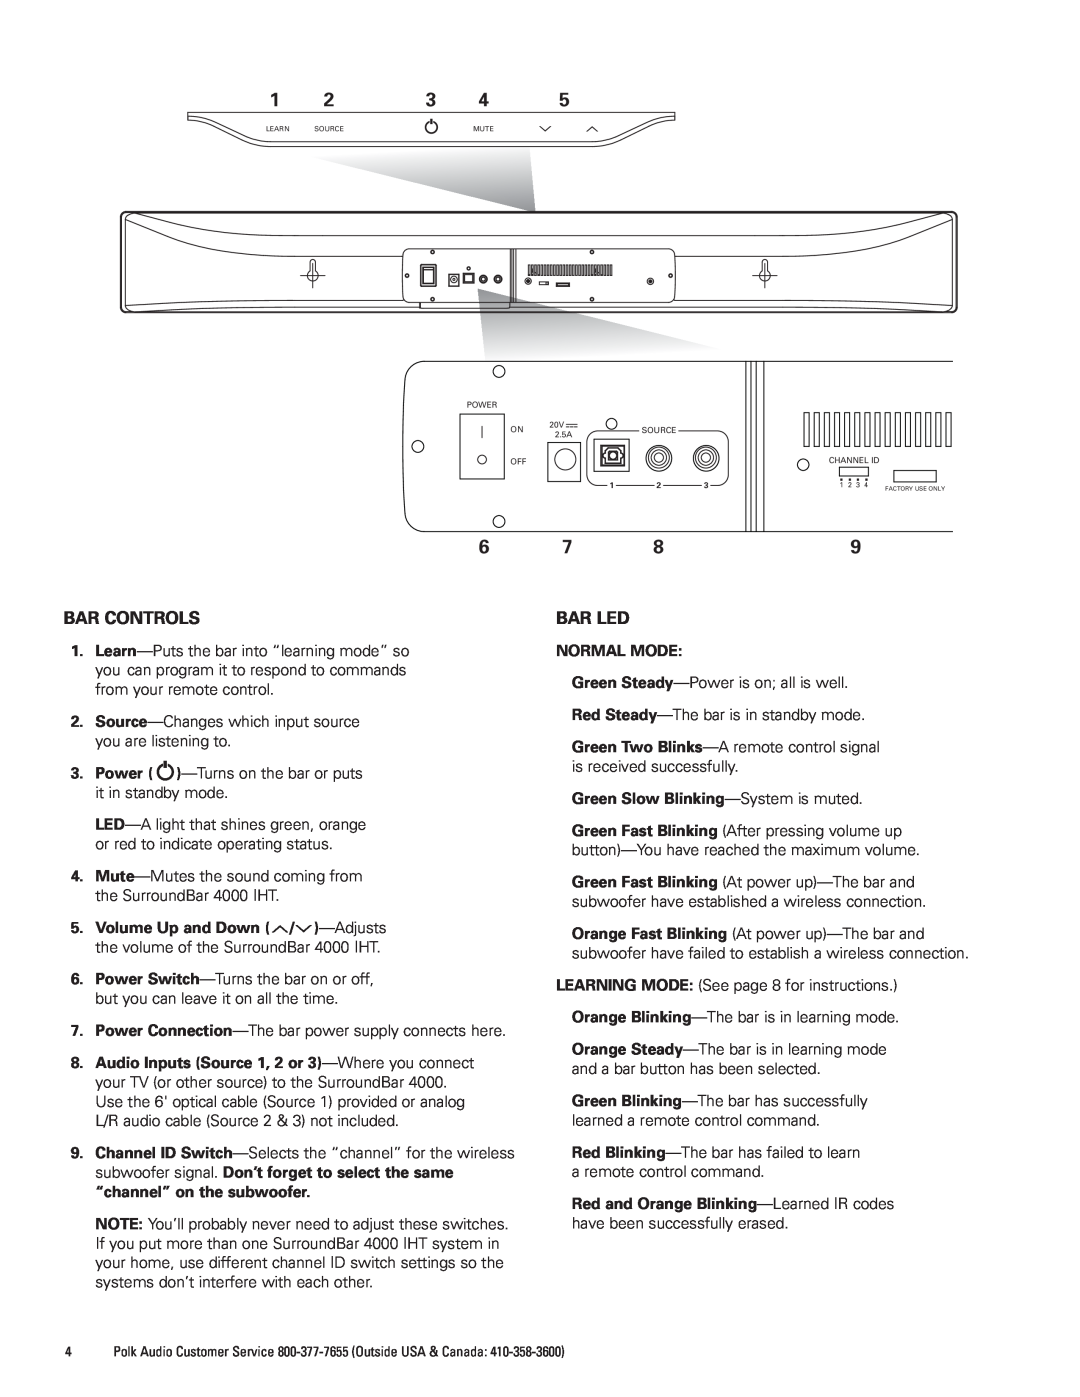 Polk Audio 4000 manual Bar Controls, Bar Led, Normal Mode, Green Slow Blinking-Systemis muted 